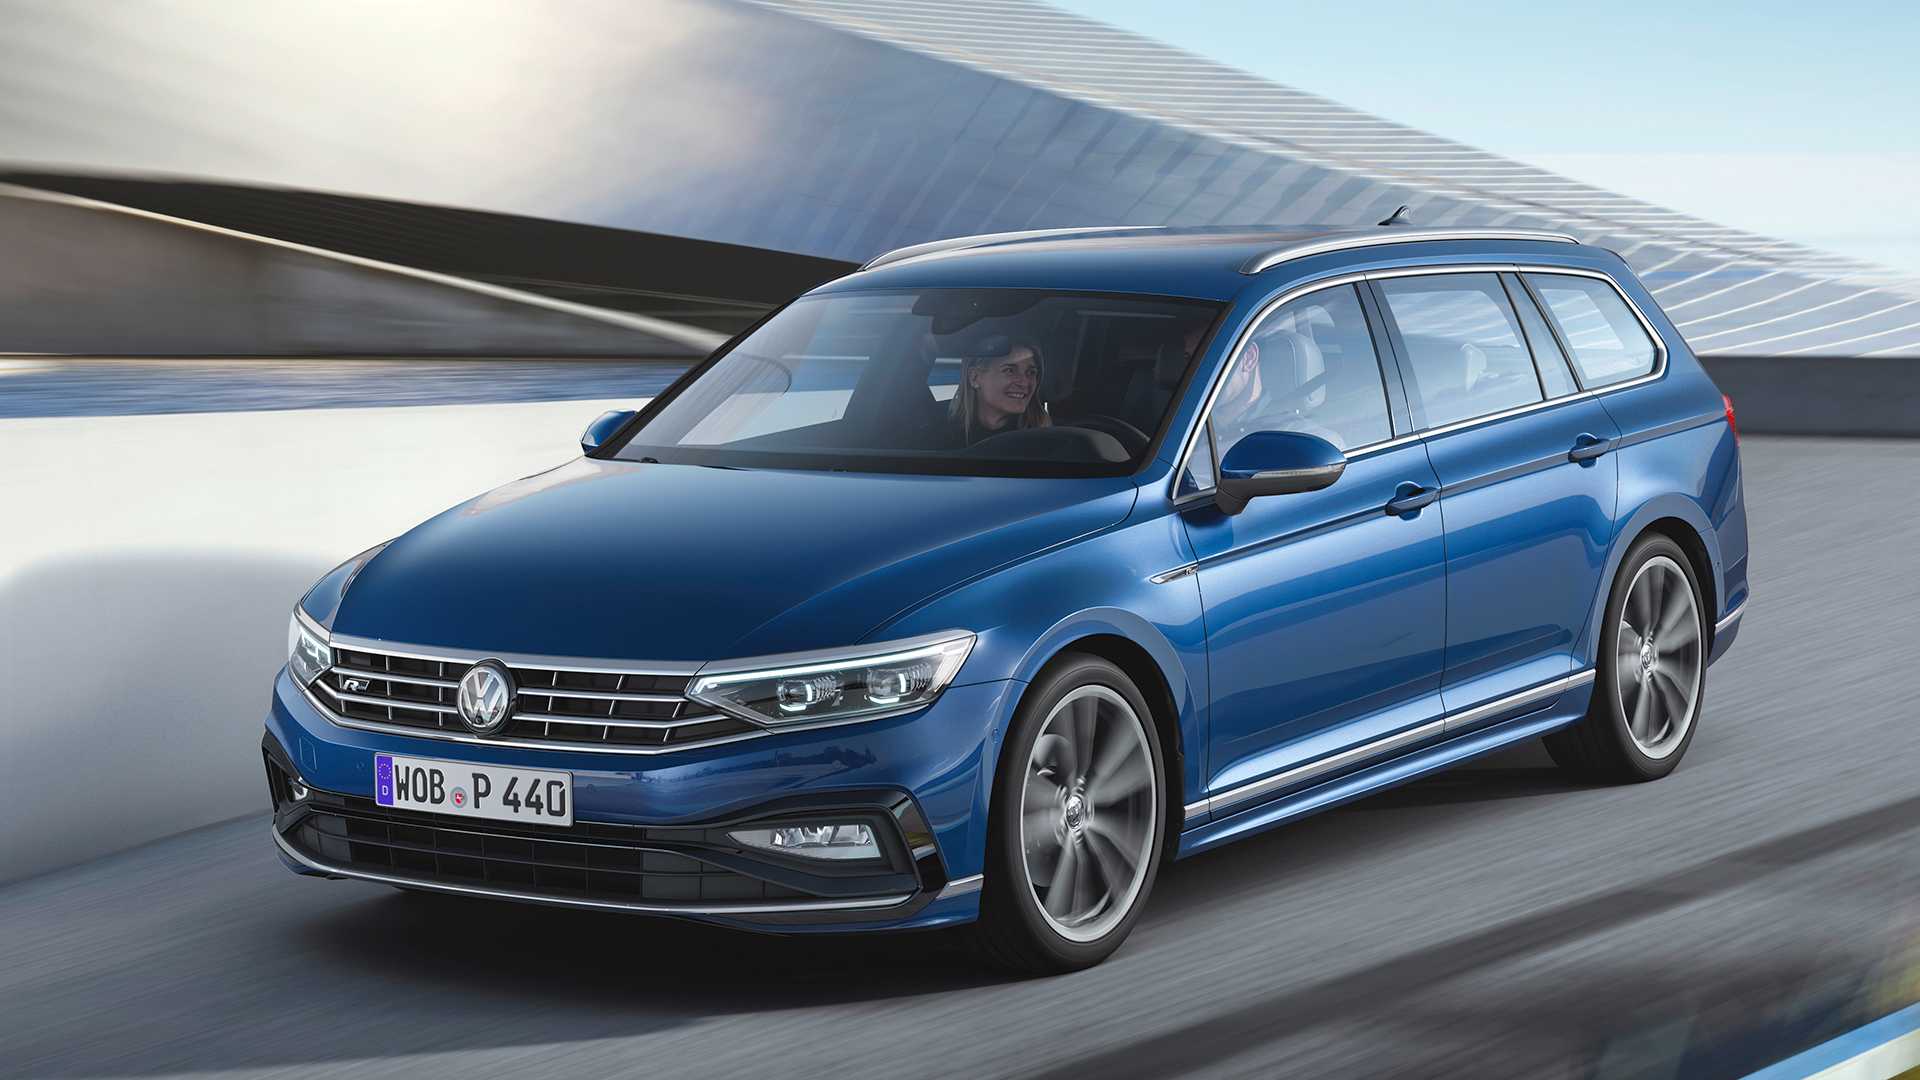 Volkswagen Passat Facelift Officially Revealed In Europe